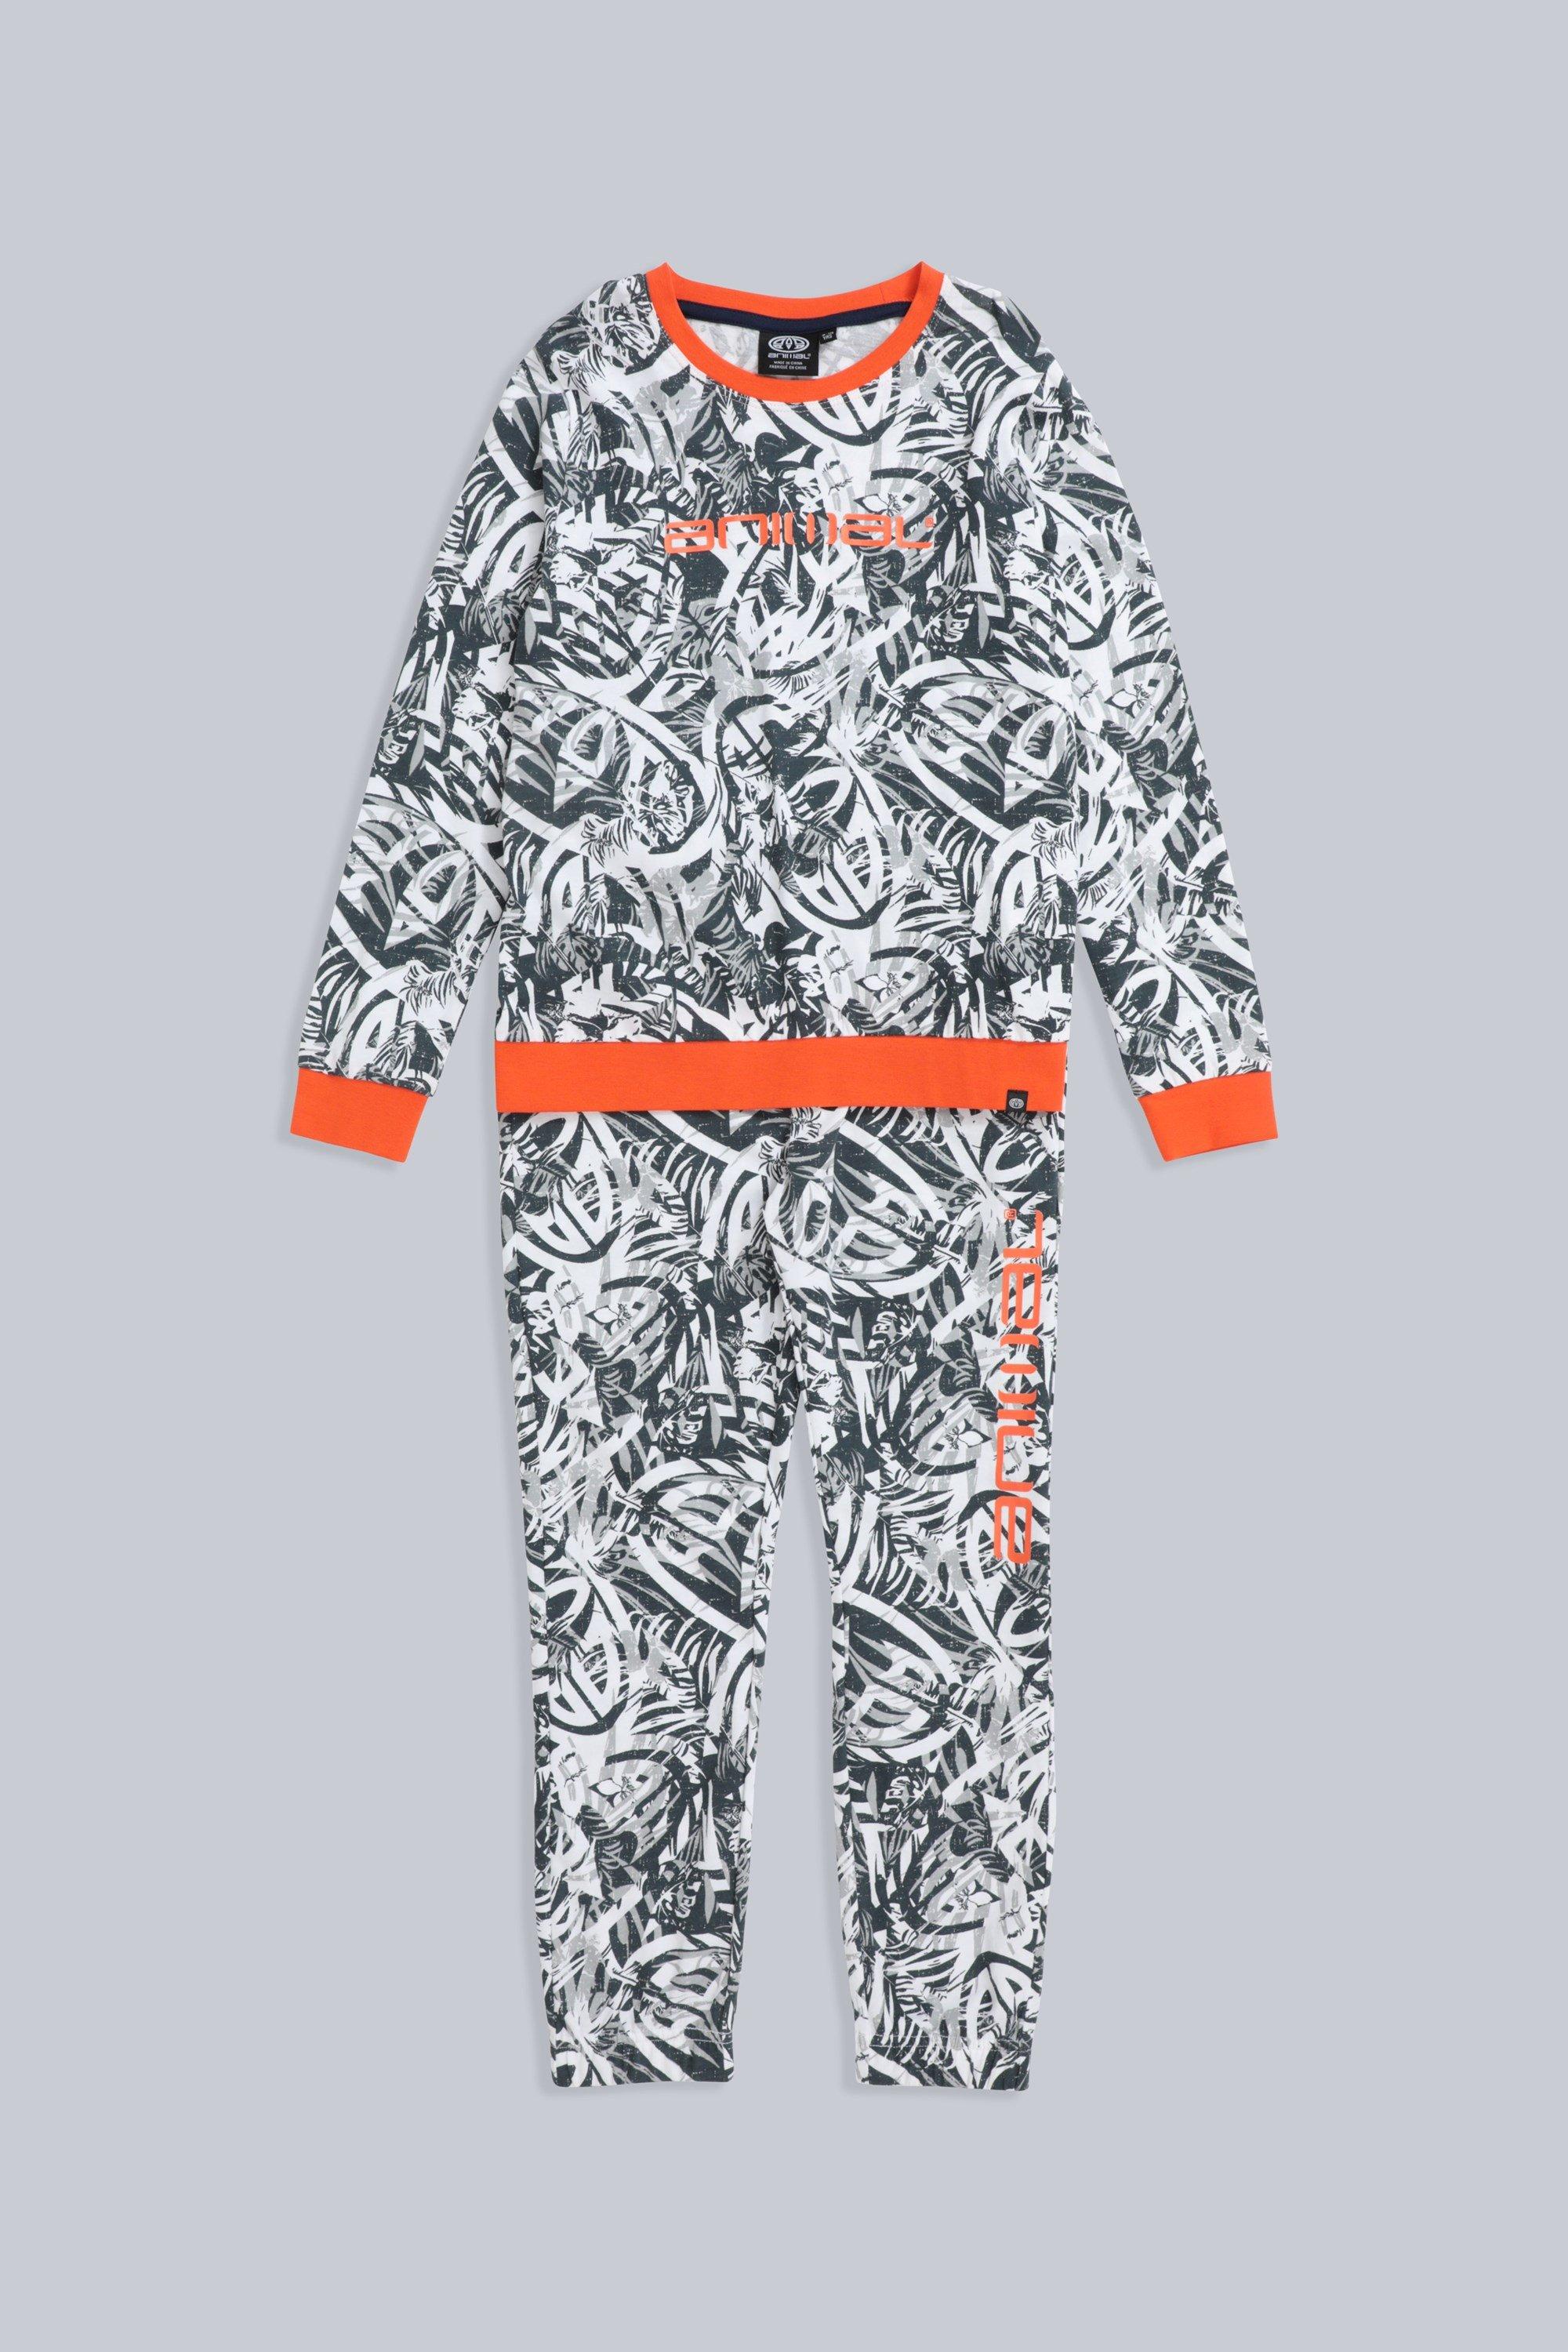 Doze  Pyjama Set  Organic Printed Loungewear with Elastic Cuffs